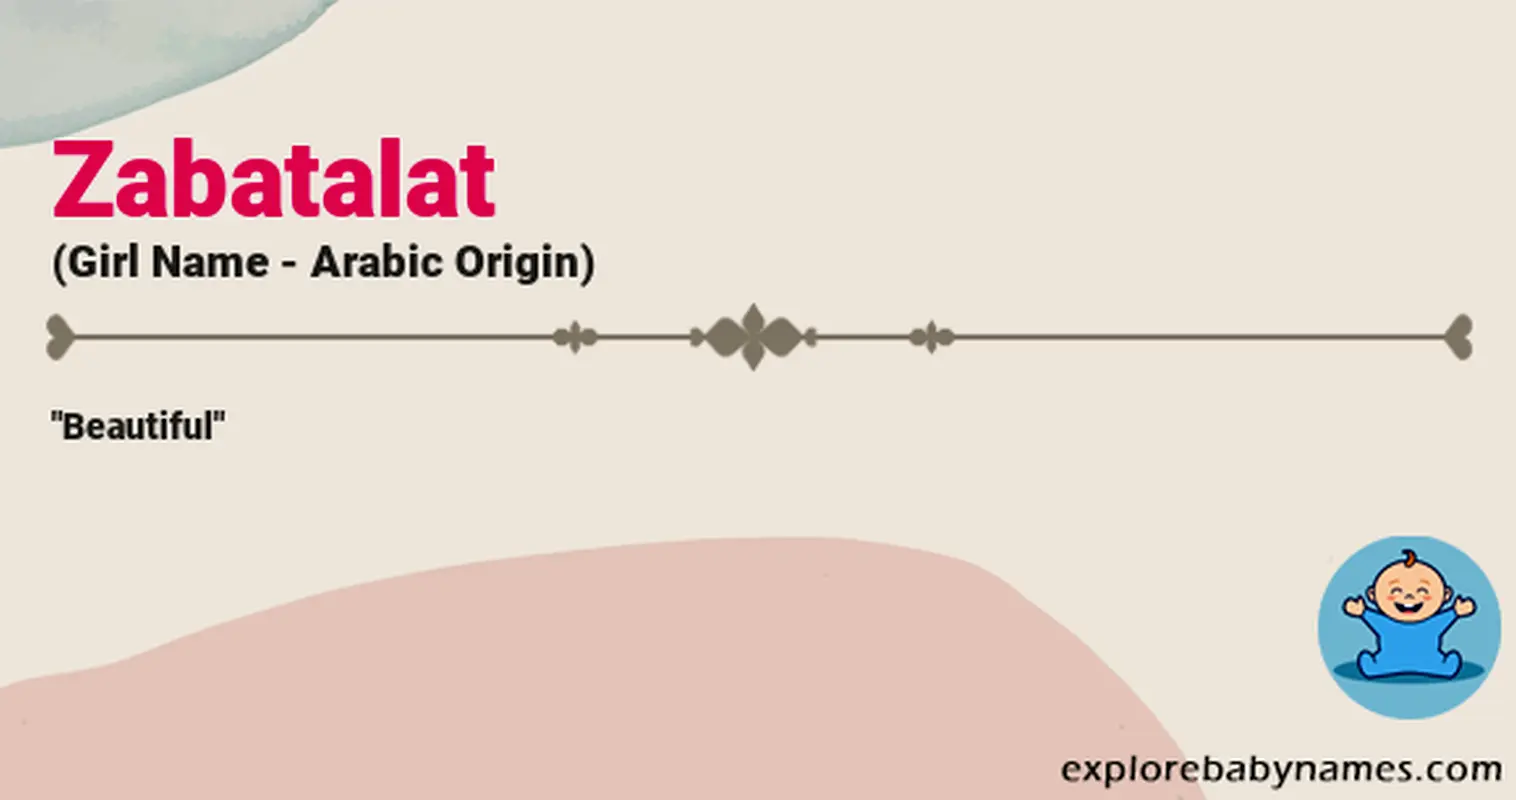 Meaning of Zabatalat